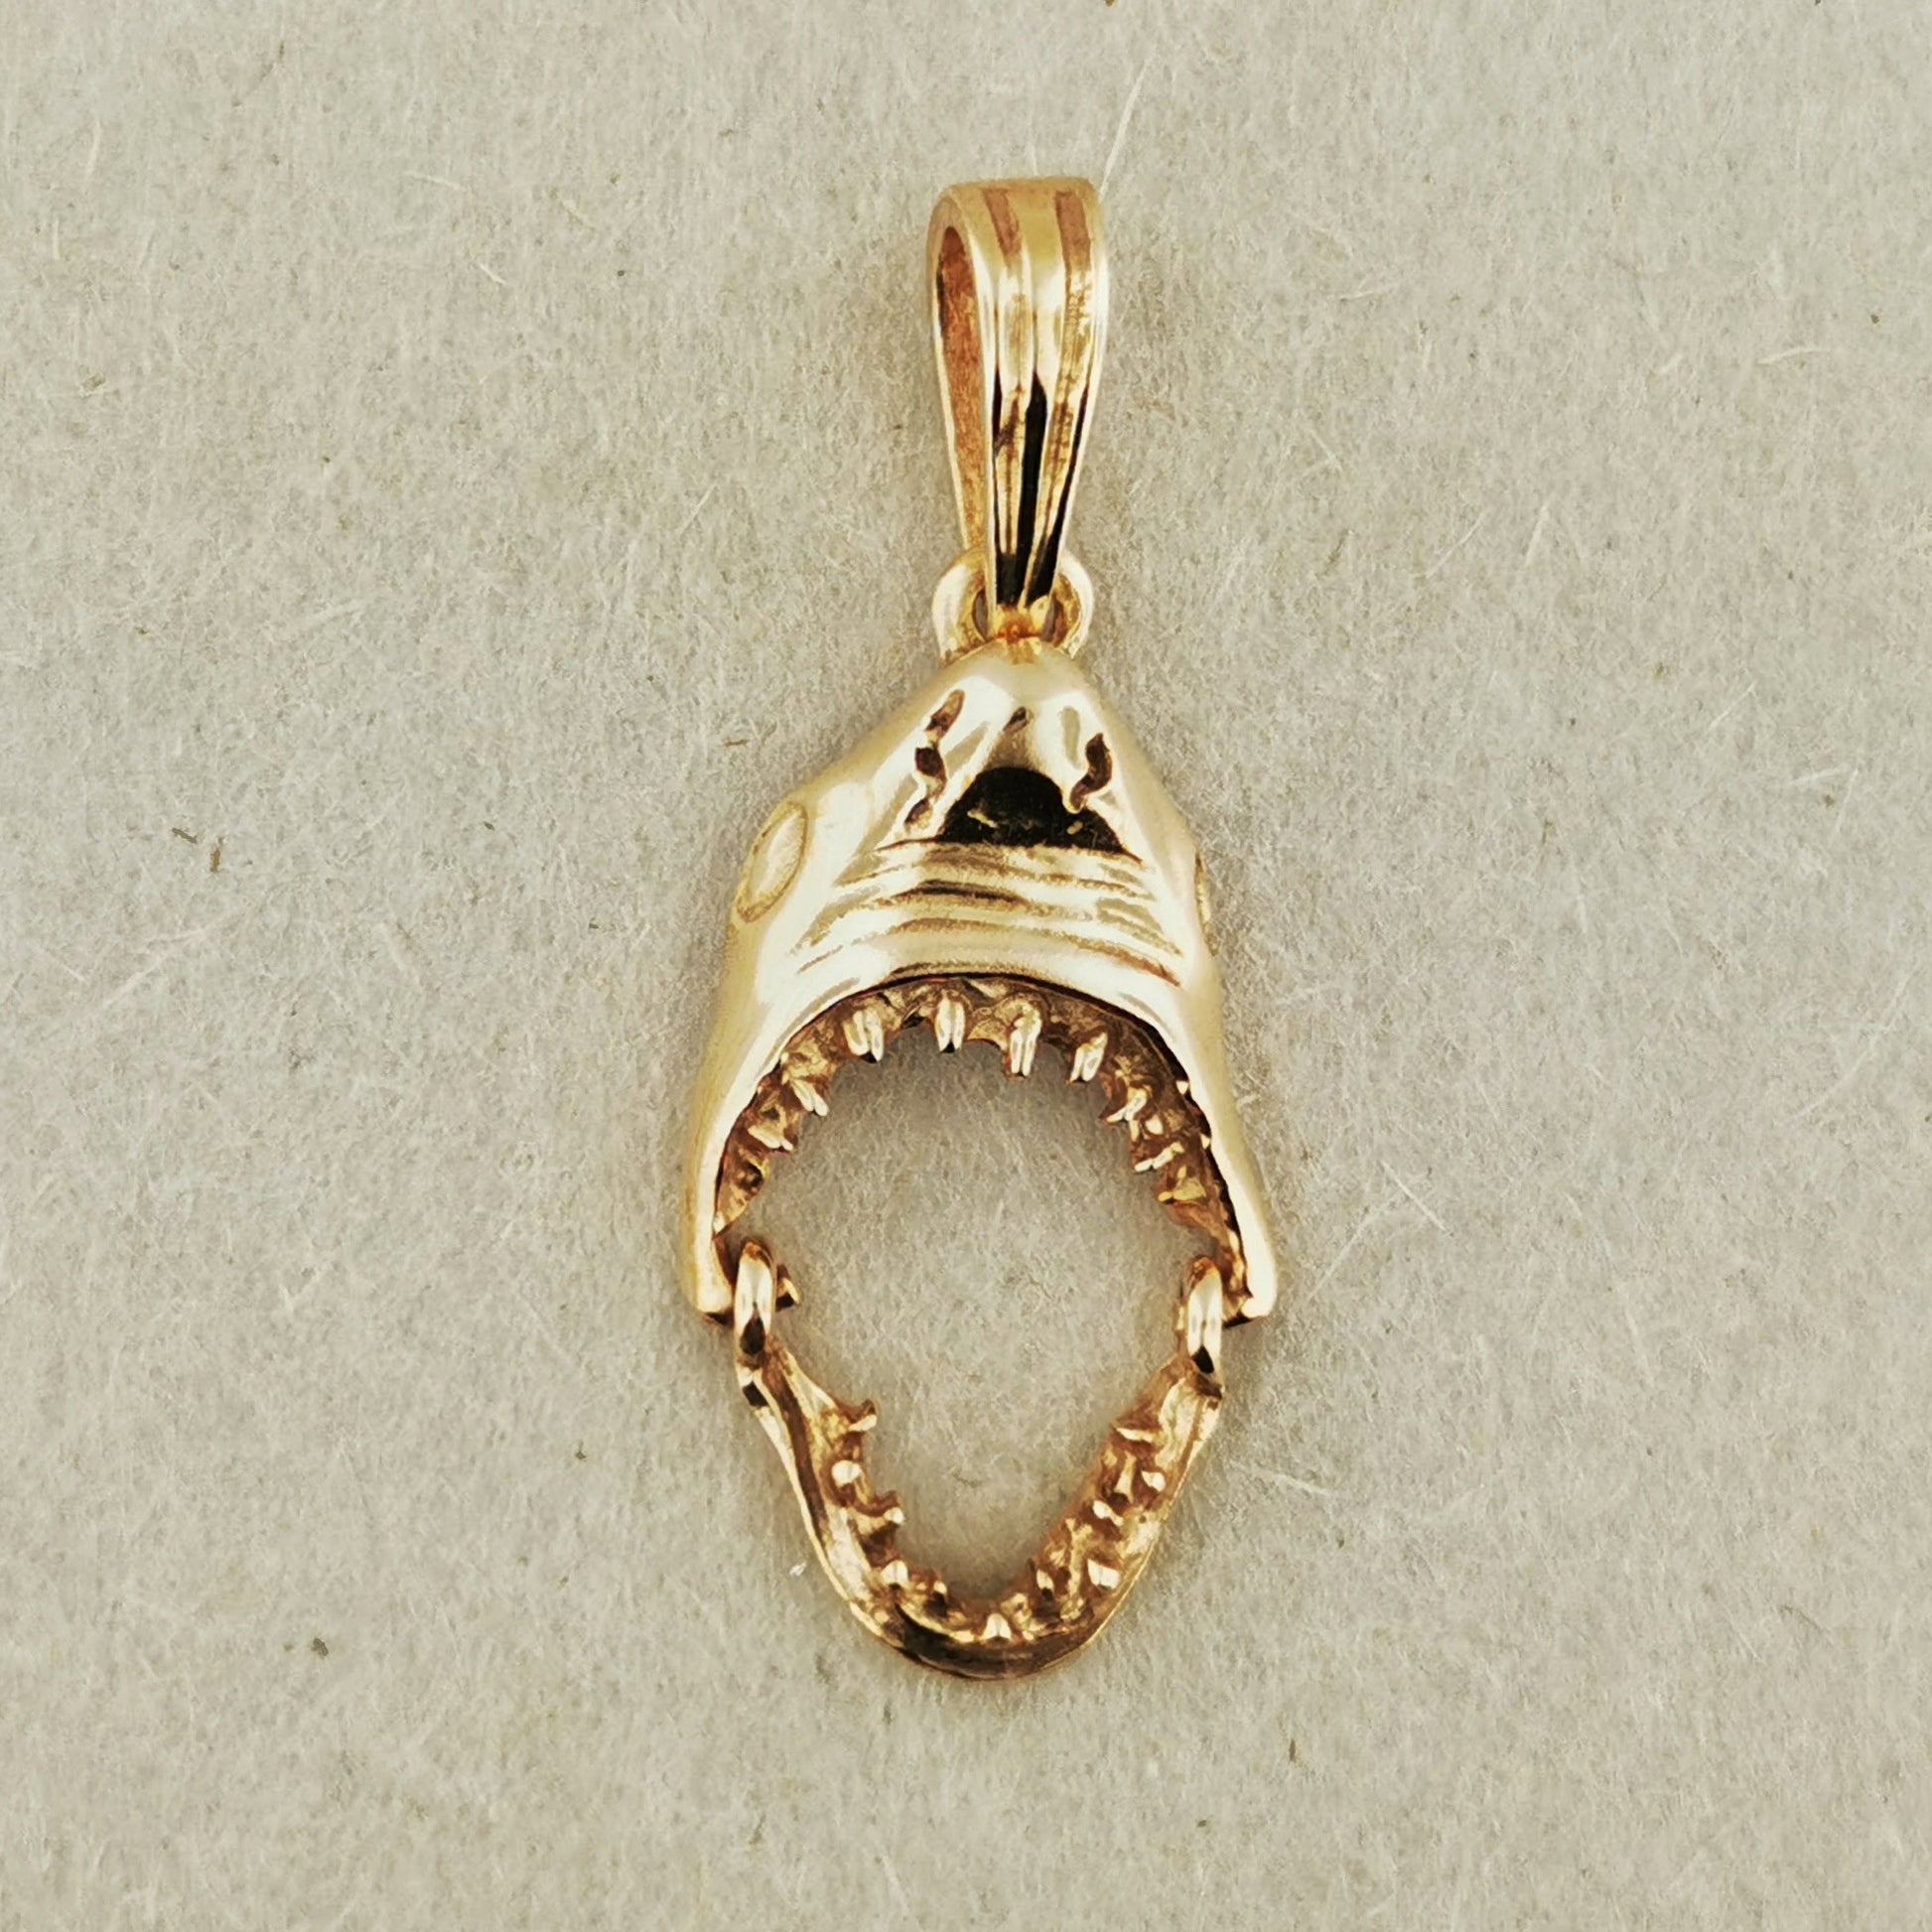 antique bronze shark pendant, killer shark pendant, shark necklace, shark pendant, animal pendant